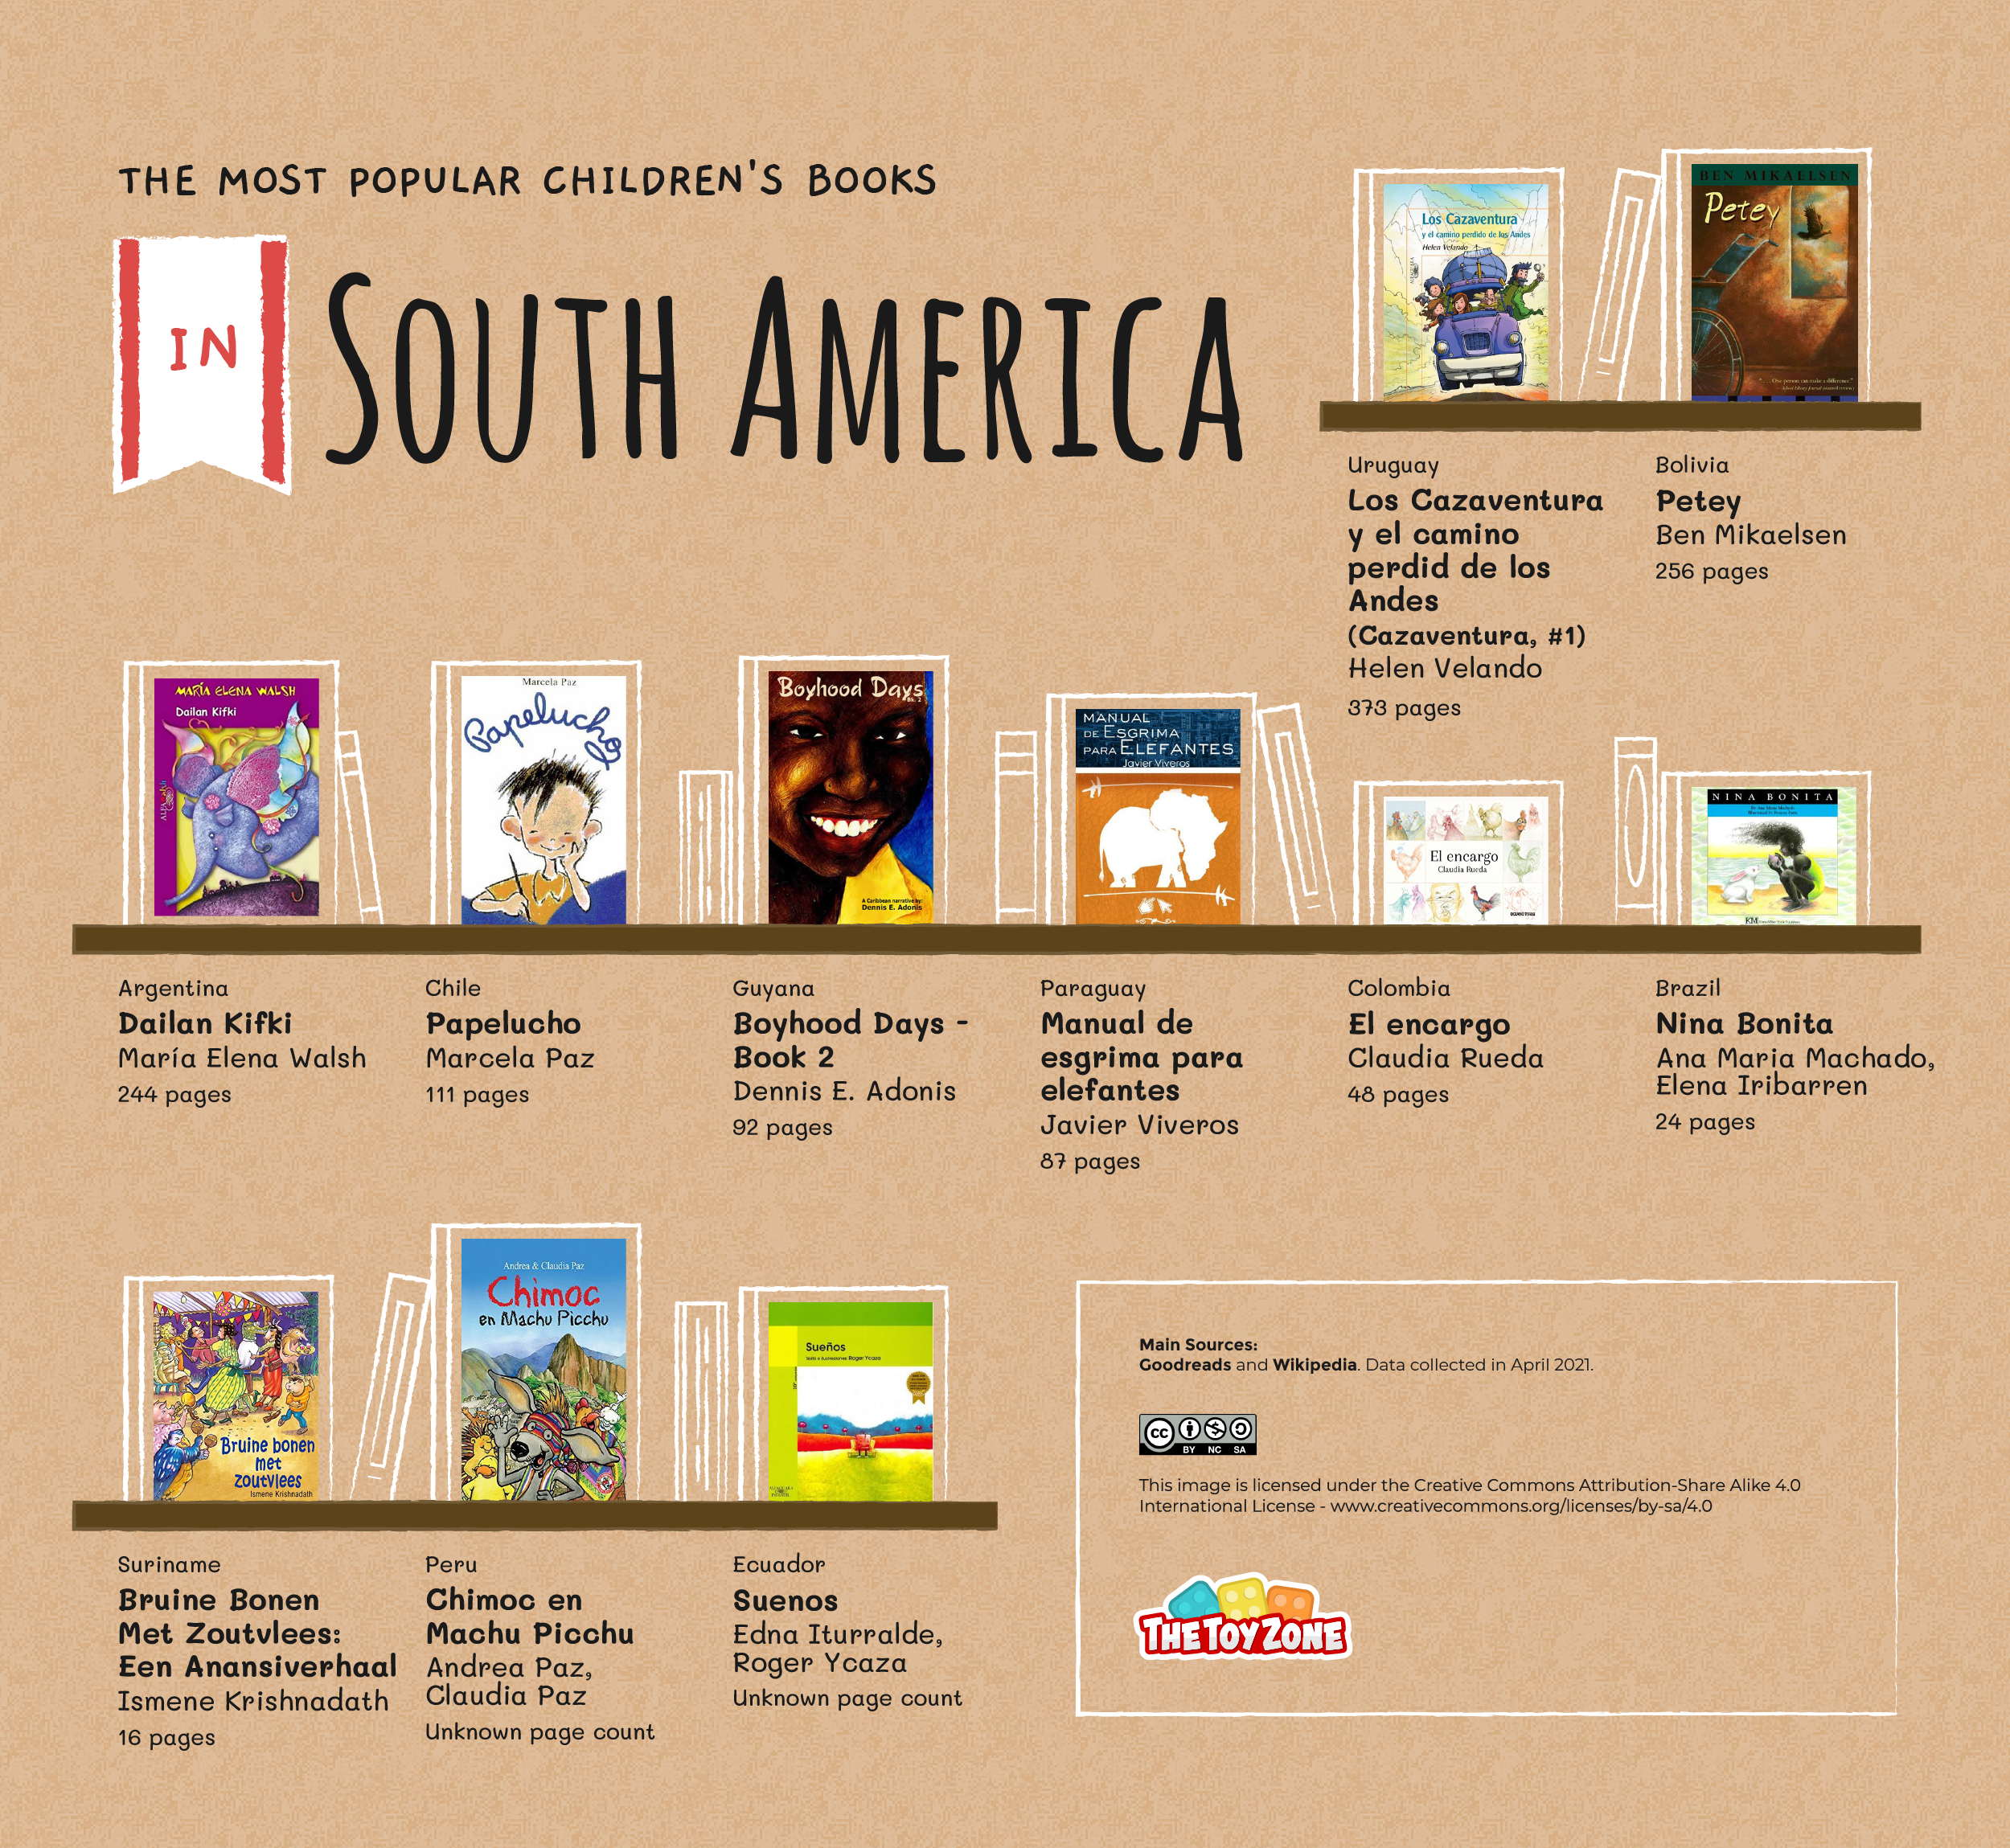 Most most popular children's books in South America bookshelf graphic